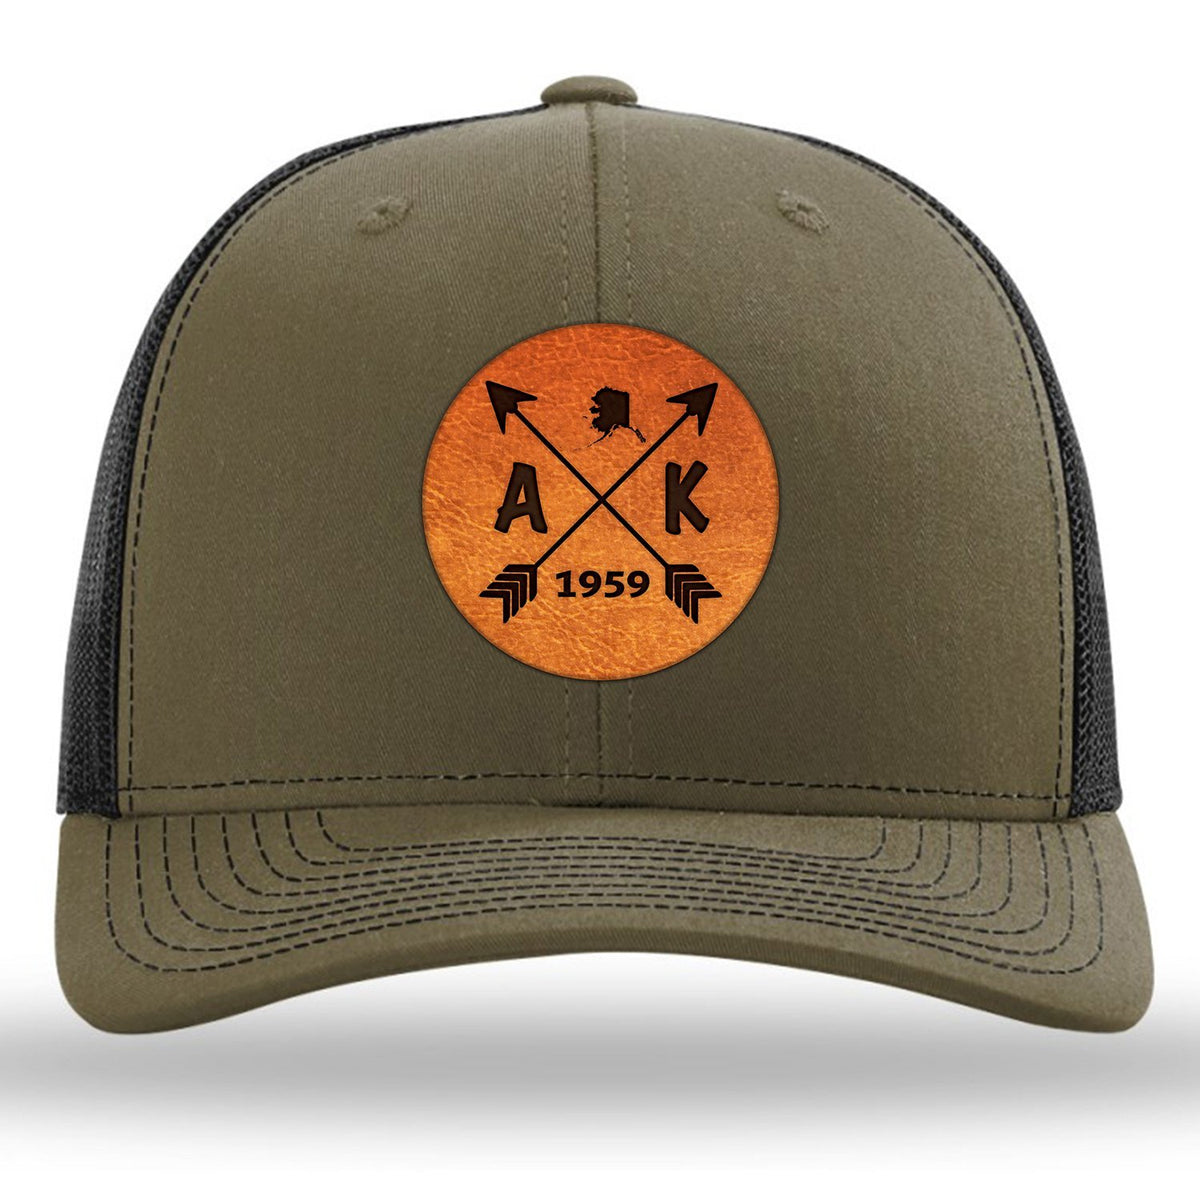 Alaska State Arrows - Leather Patch Trucker Hat